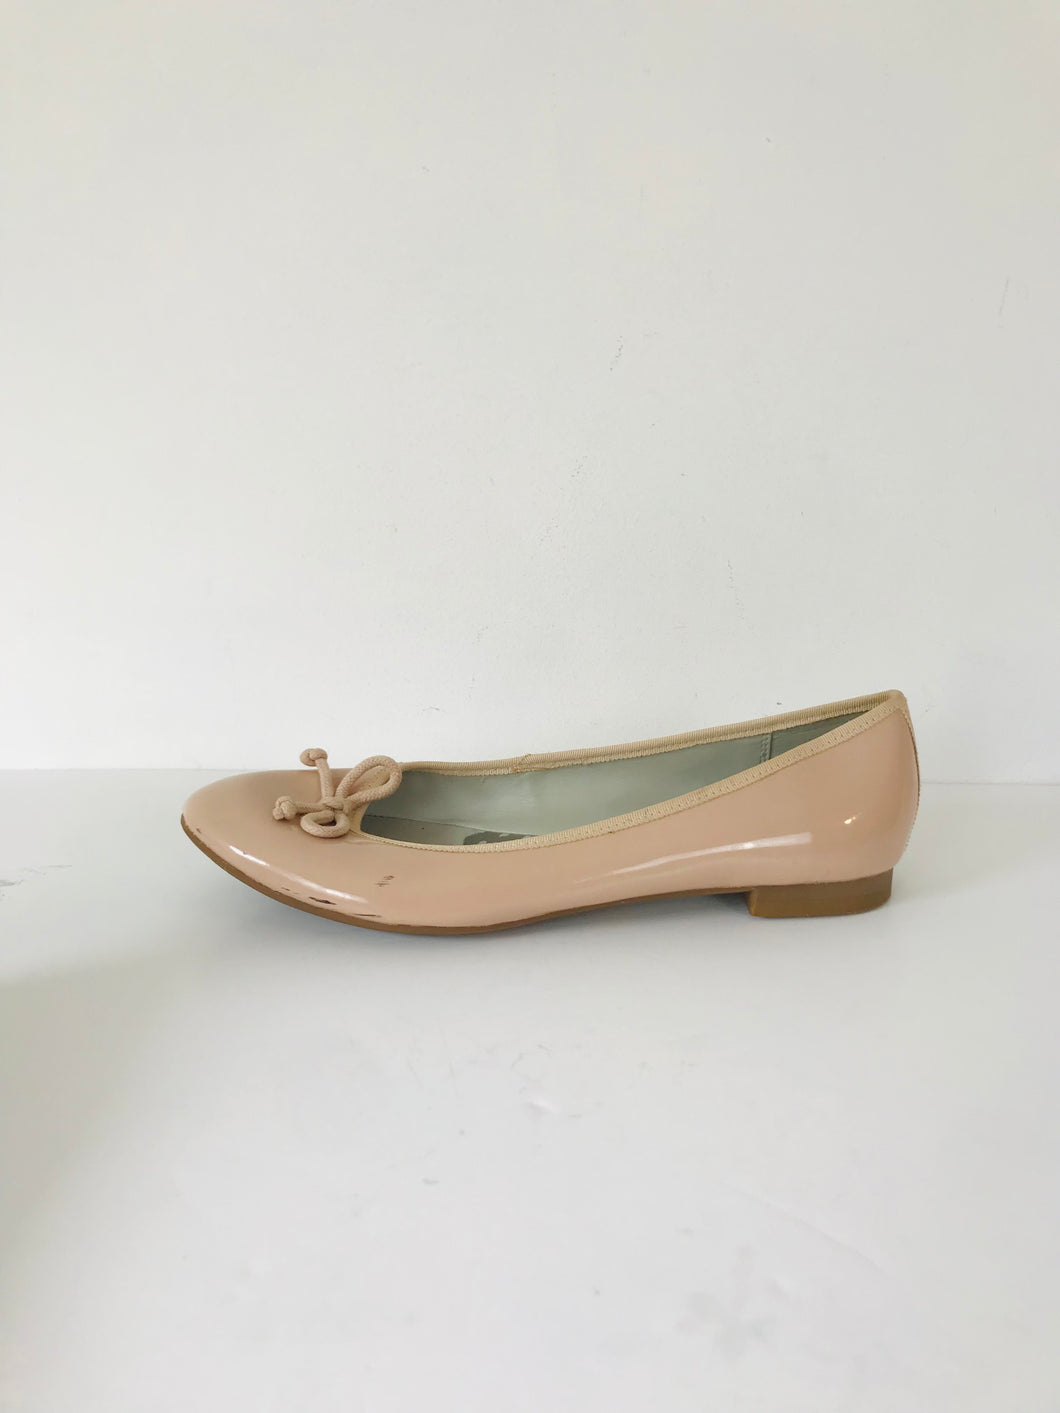 Clarks Women's Ballet Flats Shoes | UK6.5 | Pink